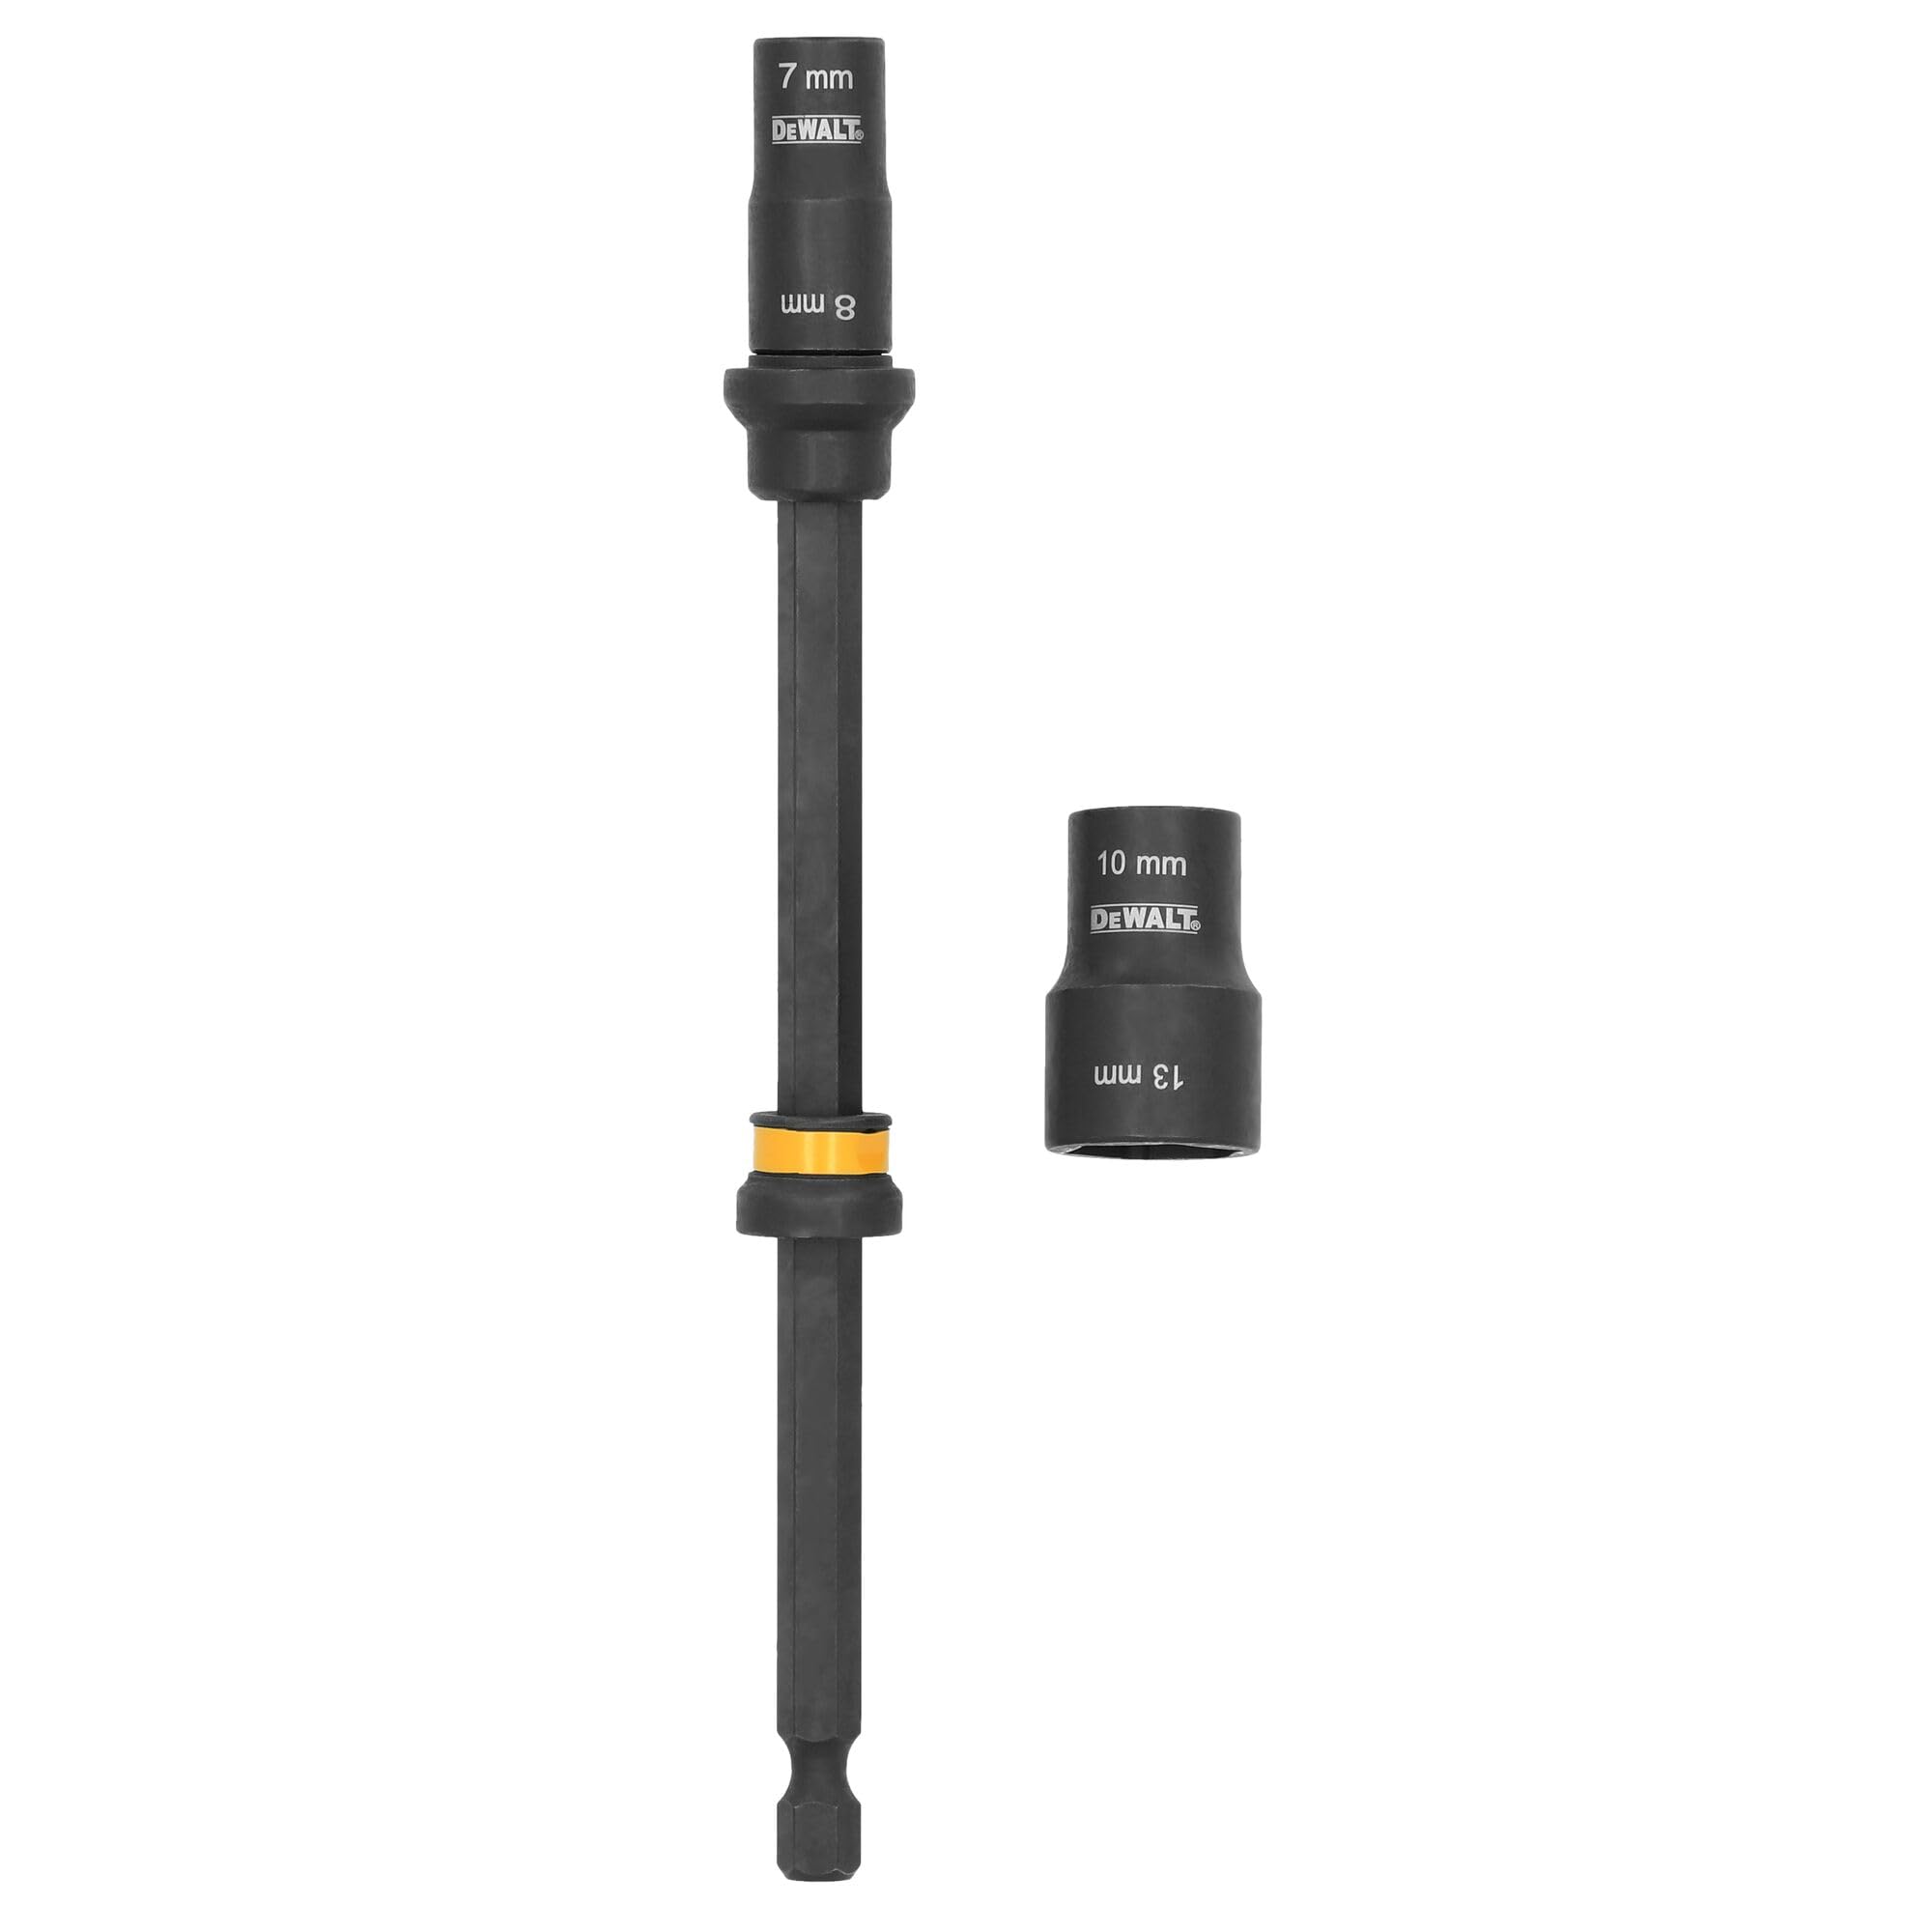 DEWALT FLEXTORQ Socket and Socket Extension, 4 in 1, 7mm & 8mm Socket, 10mm & 13mm Socket, with 6 inch Extension, Double Ended Nut Driver (DWADENDEXT-2MM)